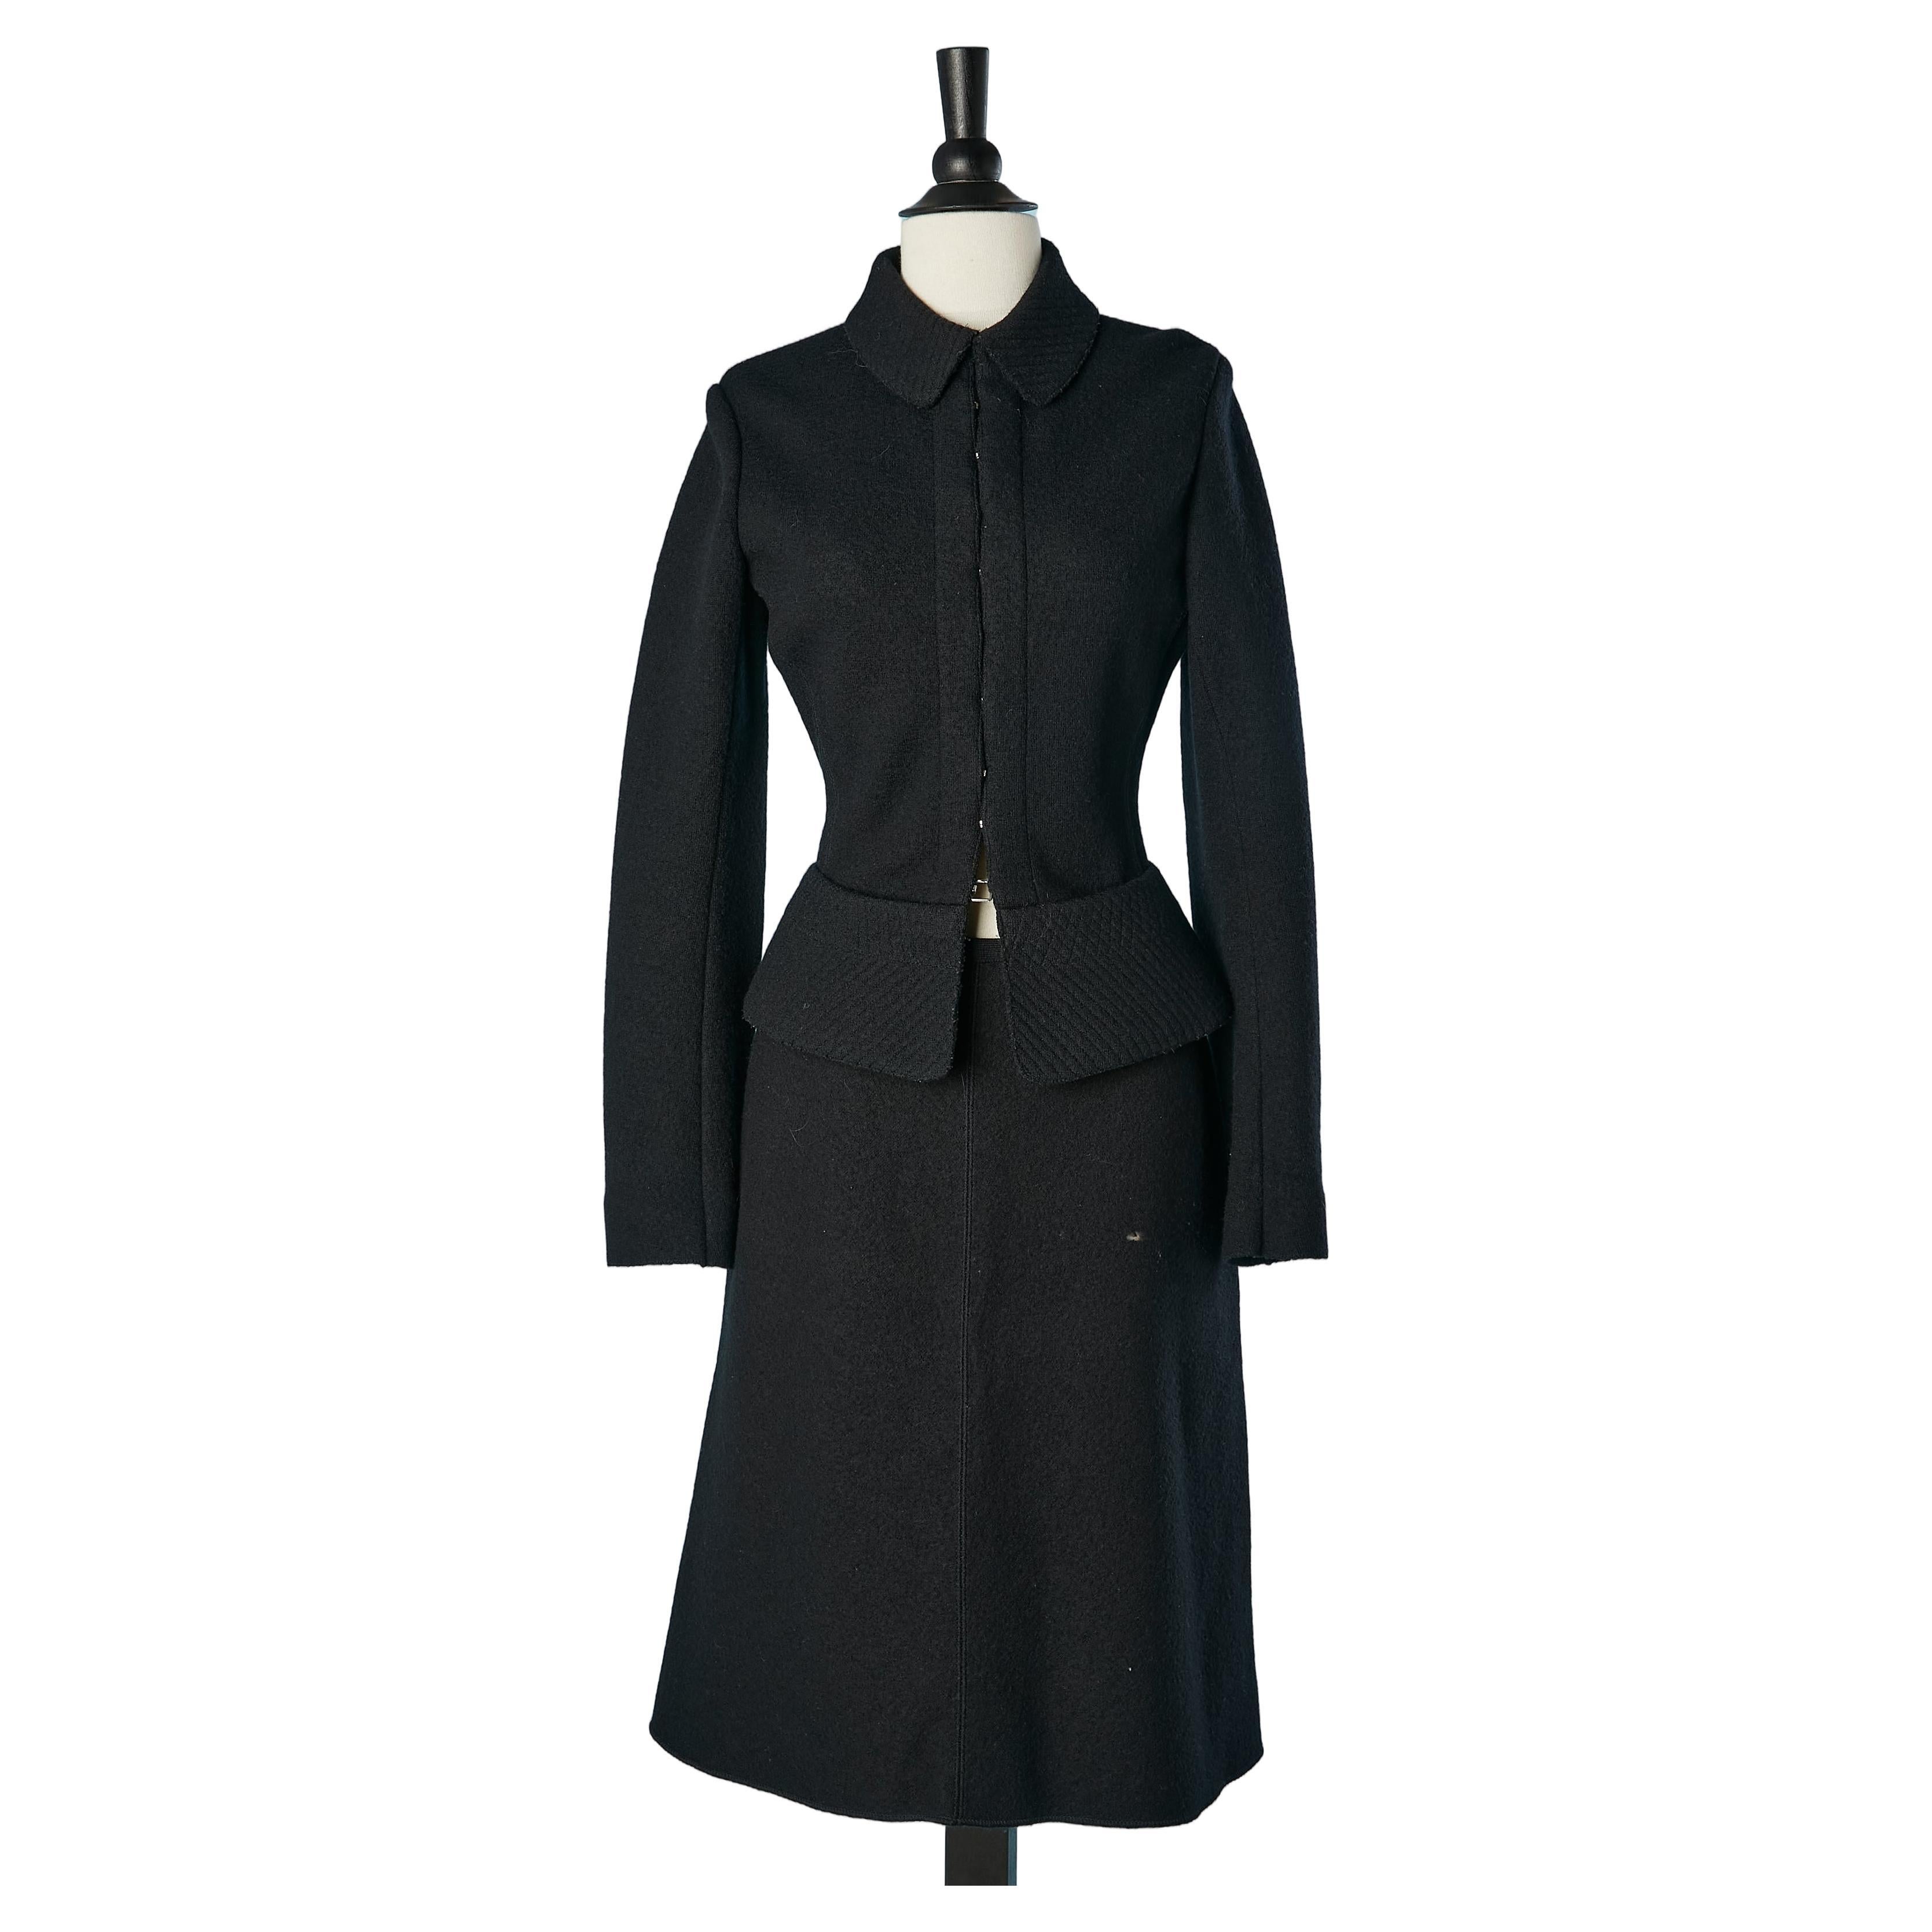 Black wool knit skirt-suit with edge to edge jacket AlaÏa 